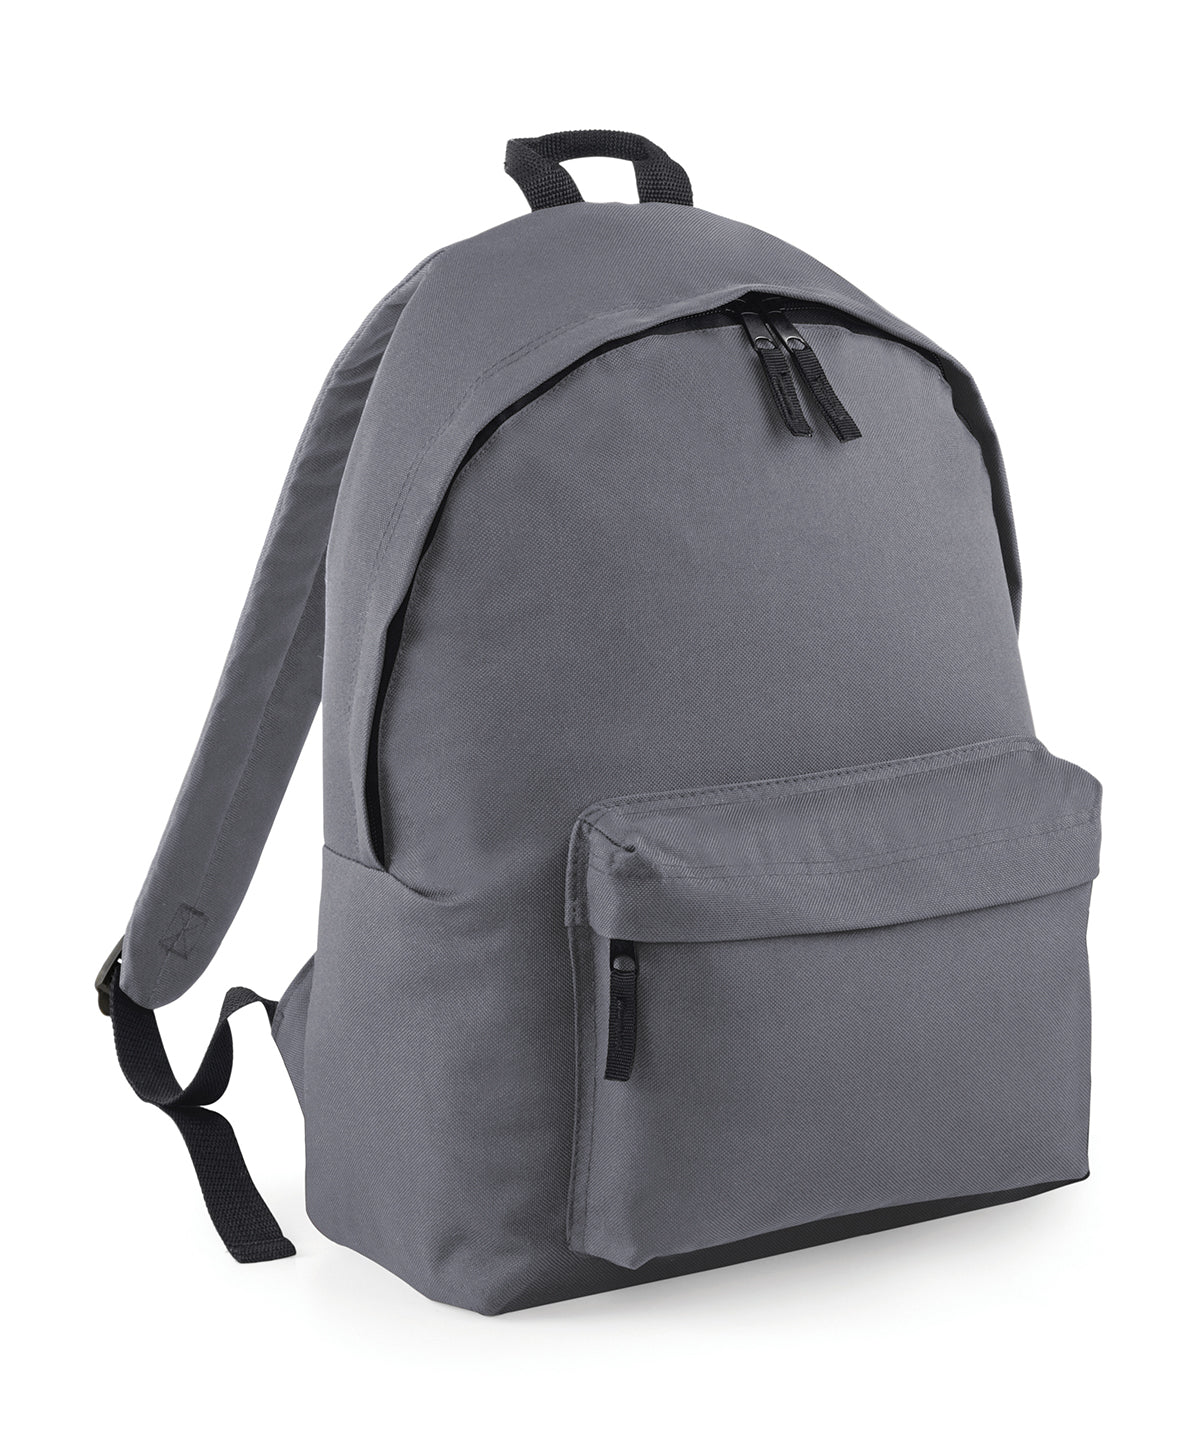 Töskur - Maxi Fashion Backpack